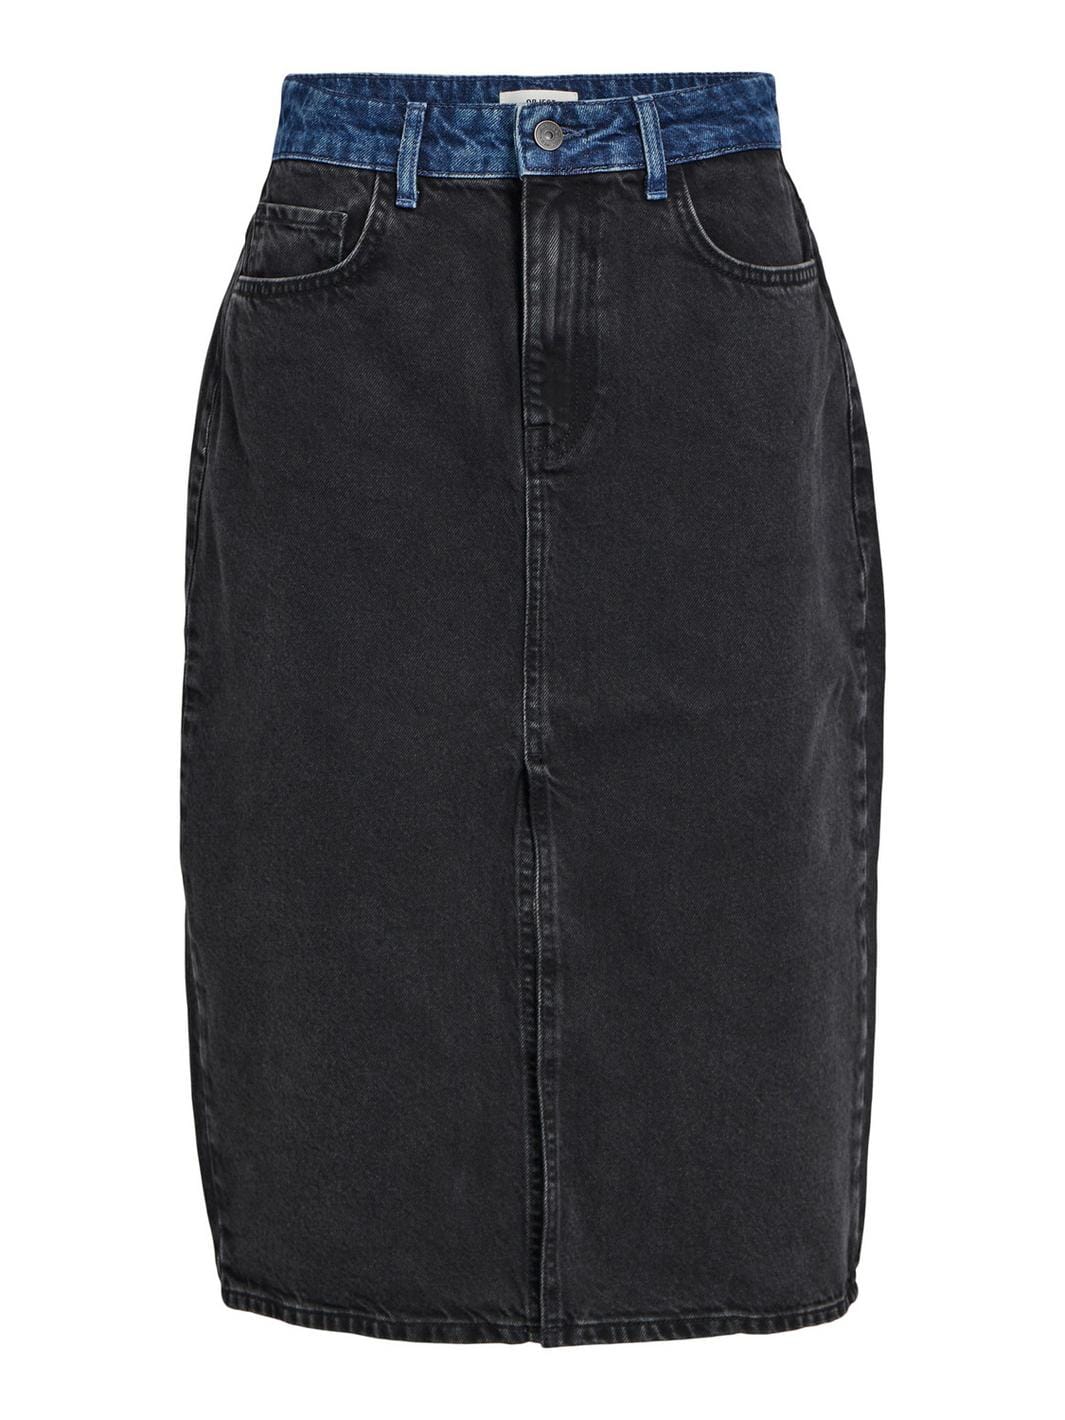 Object - Objbeate Denim Skirt Aw Fair 23 - 4487029 Black Denim Medium Blue Denim